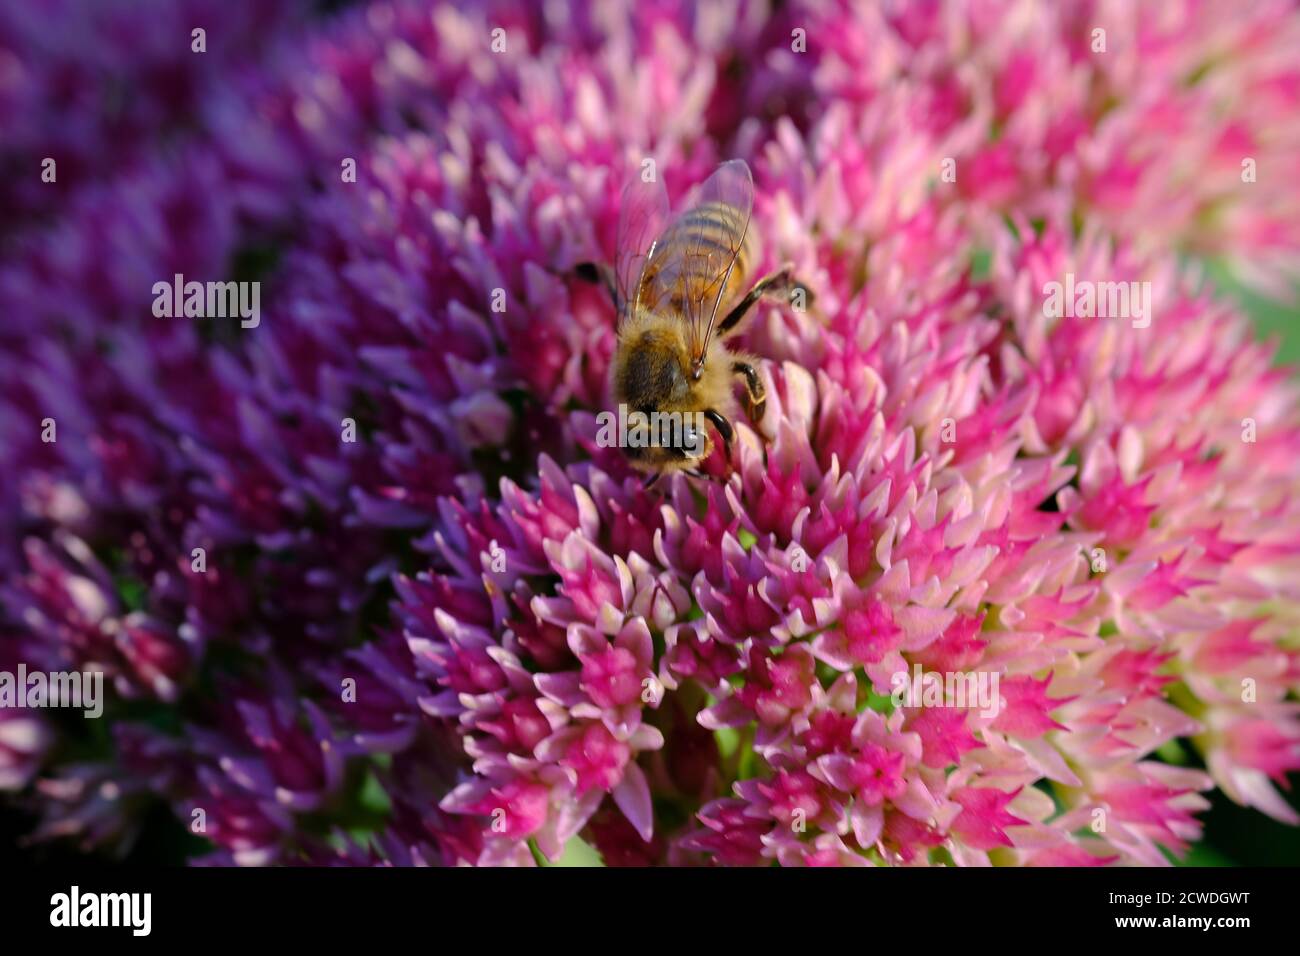 Honey bee (Apis mellifera) collecting pollen on the nectar rich flower head of an Autumn Joy (Hylotelephium herbstsfreude) sedum. Stock Photo